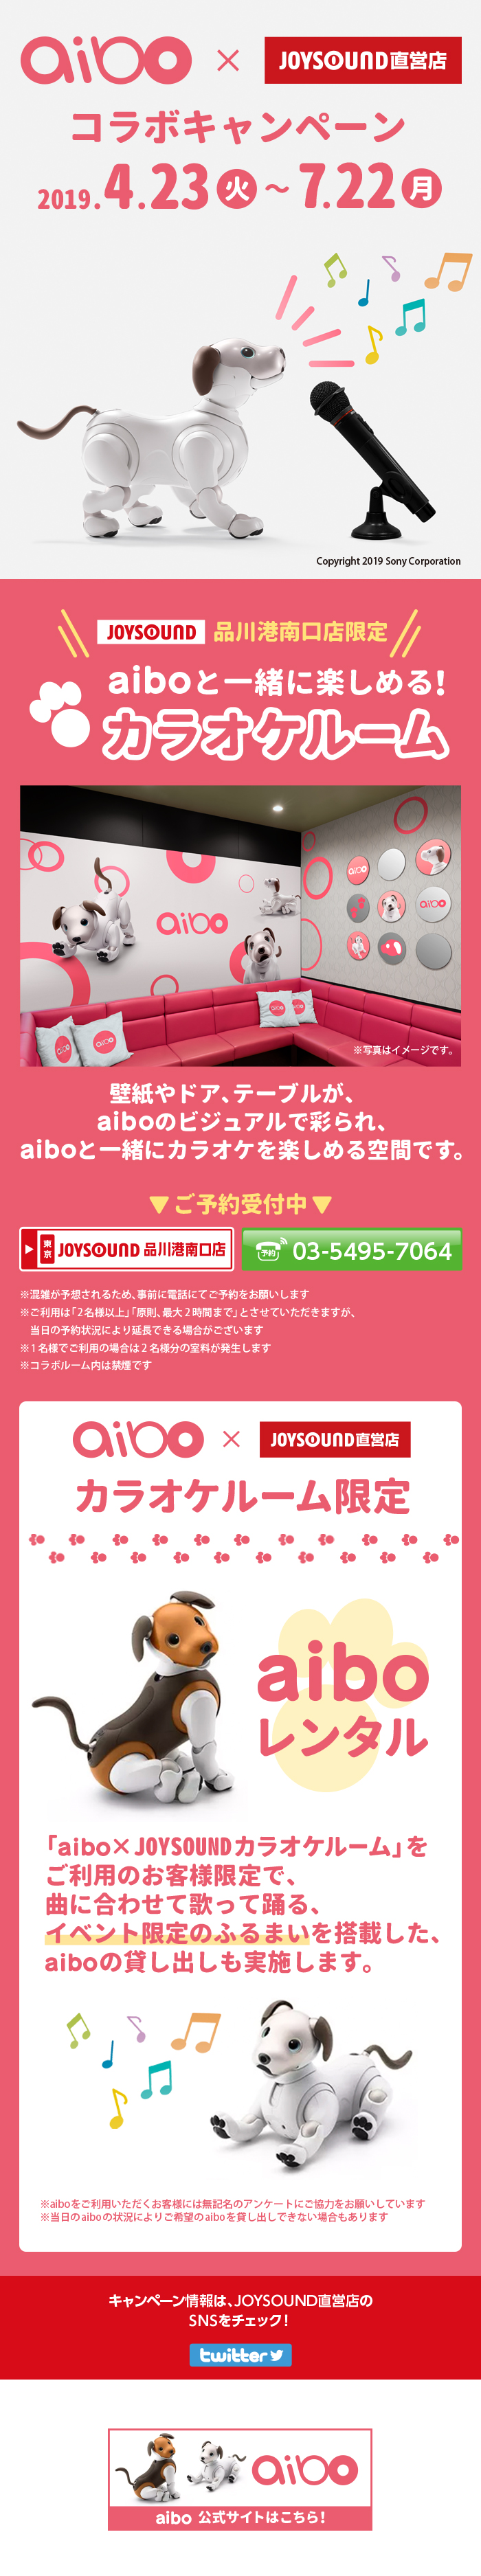 aibo×JOYSOUND直営店コラボキャンペーン